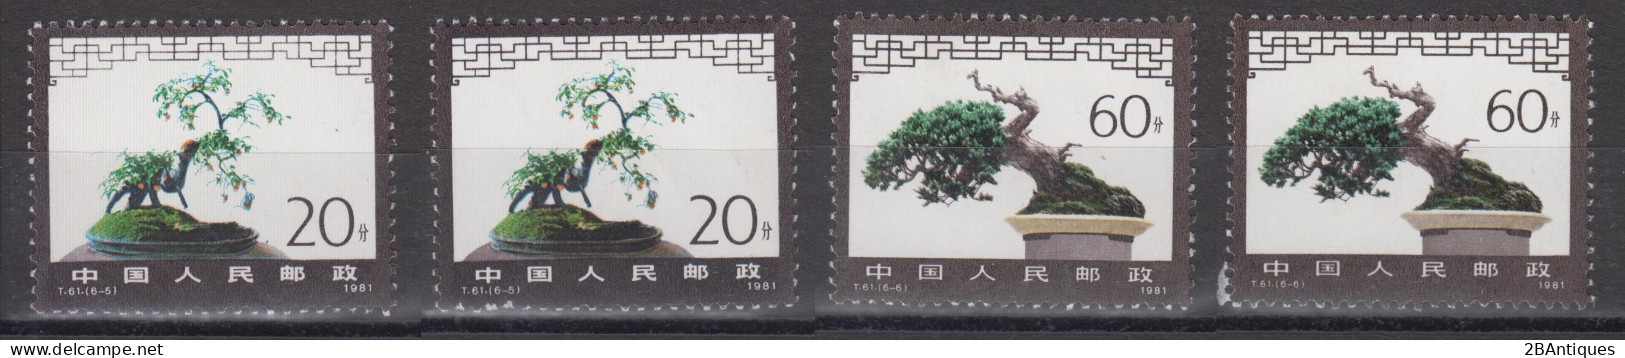 PR CHINA 1981 - Miniature Landscapes (Dwarf Trees) MNH** OG XF KEY VALUES - Nuevos